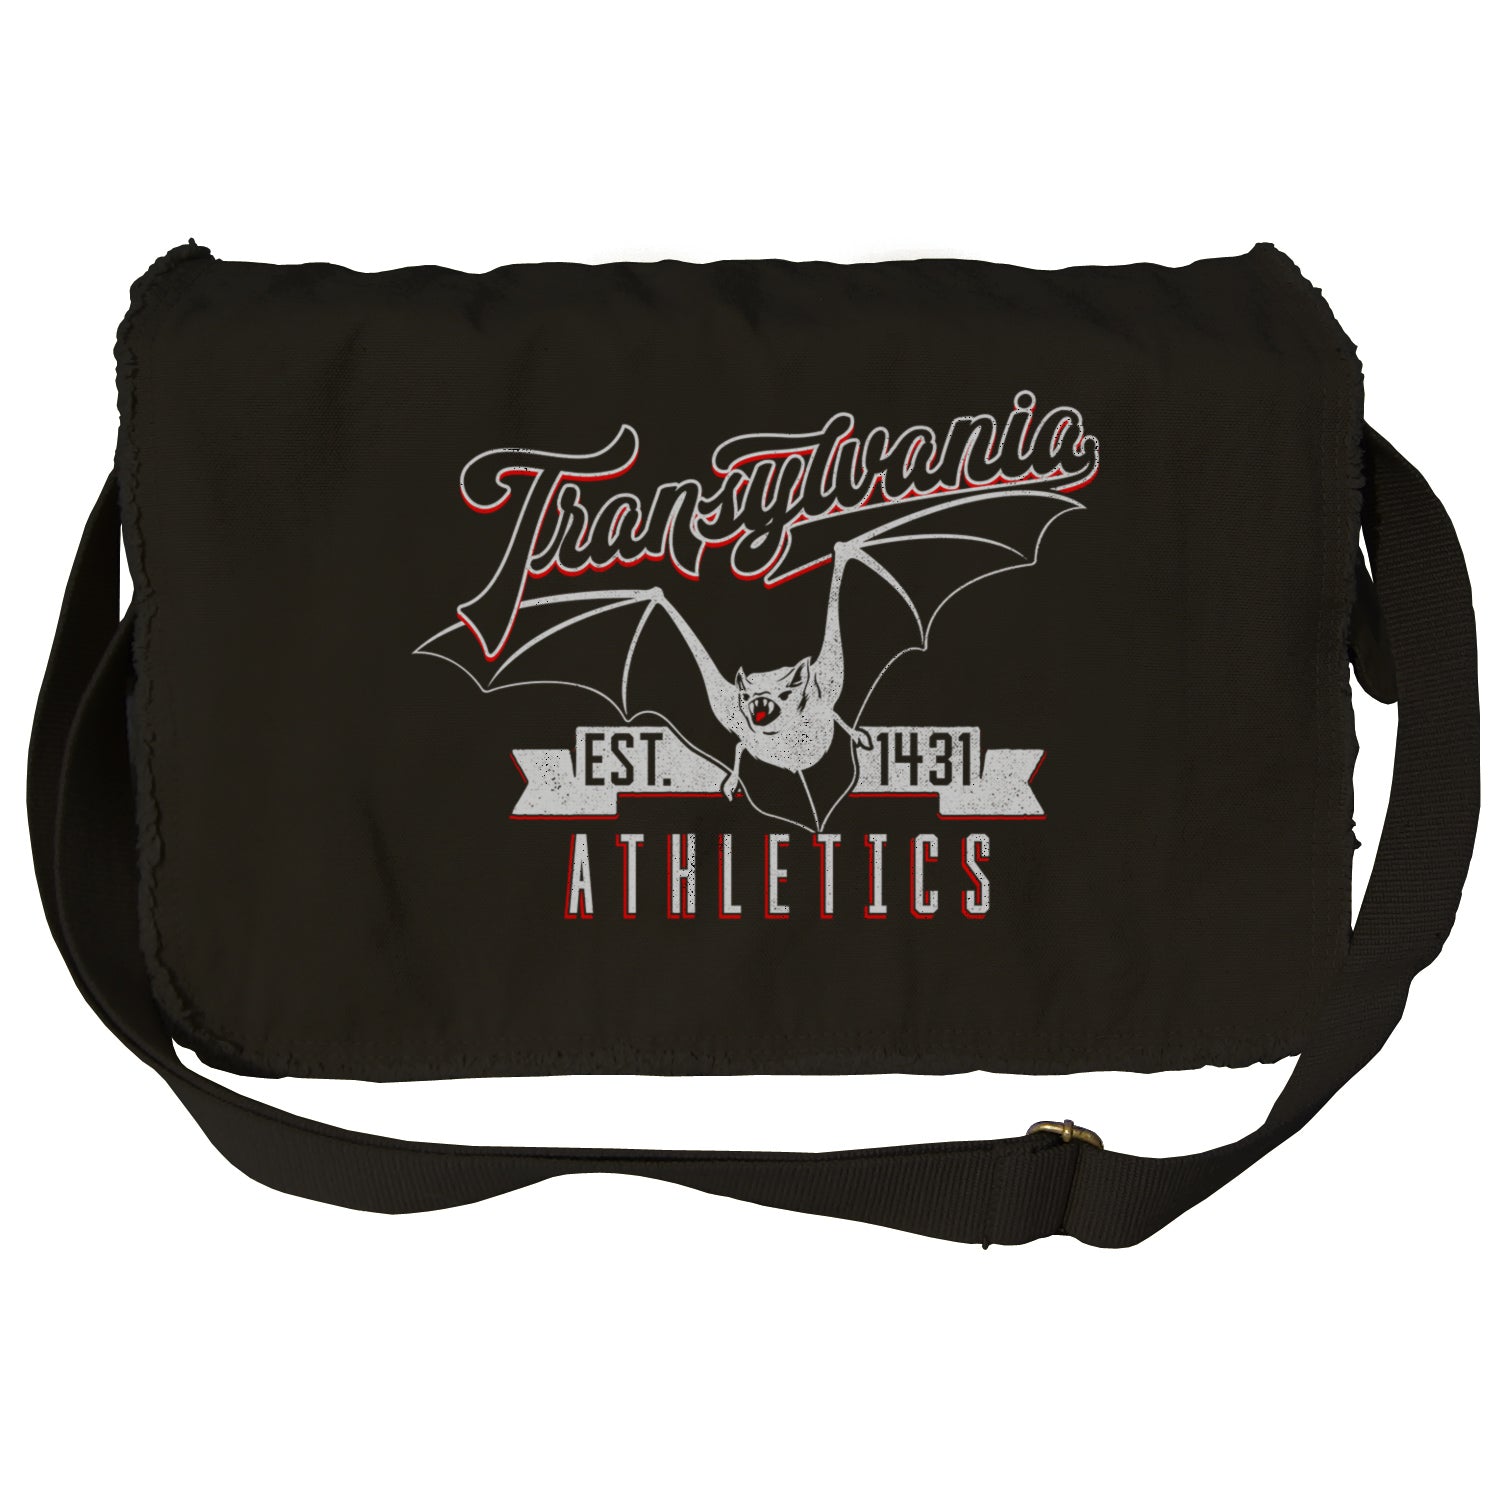 Transylvania Athletics Messenger Bag